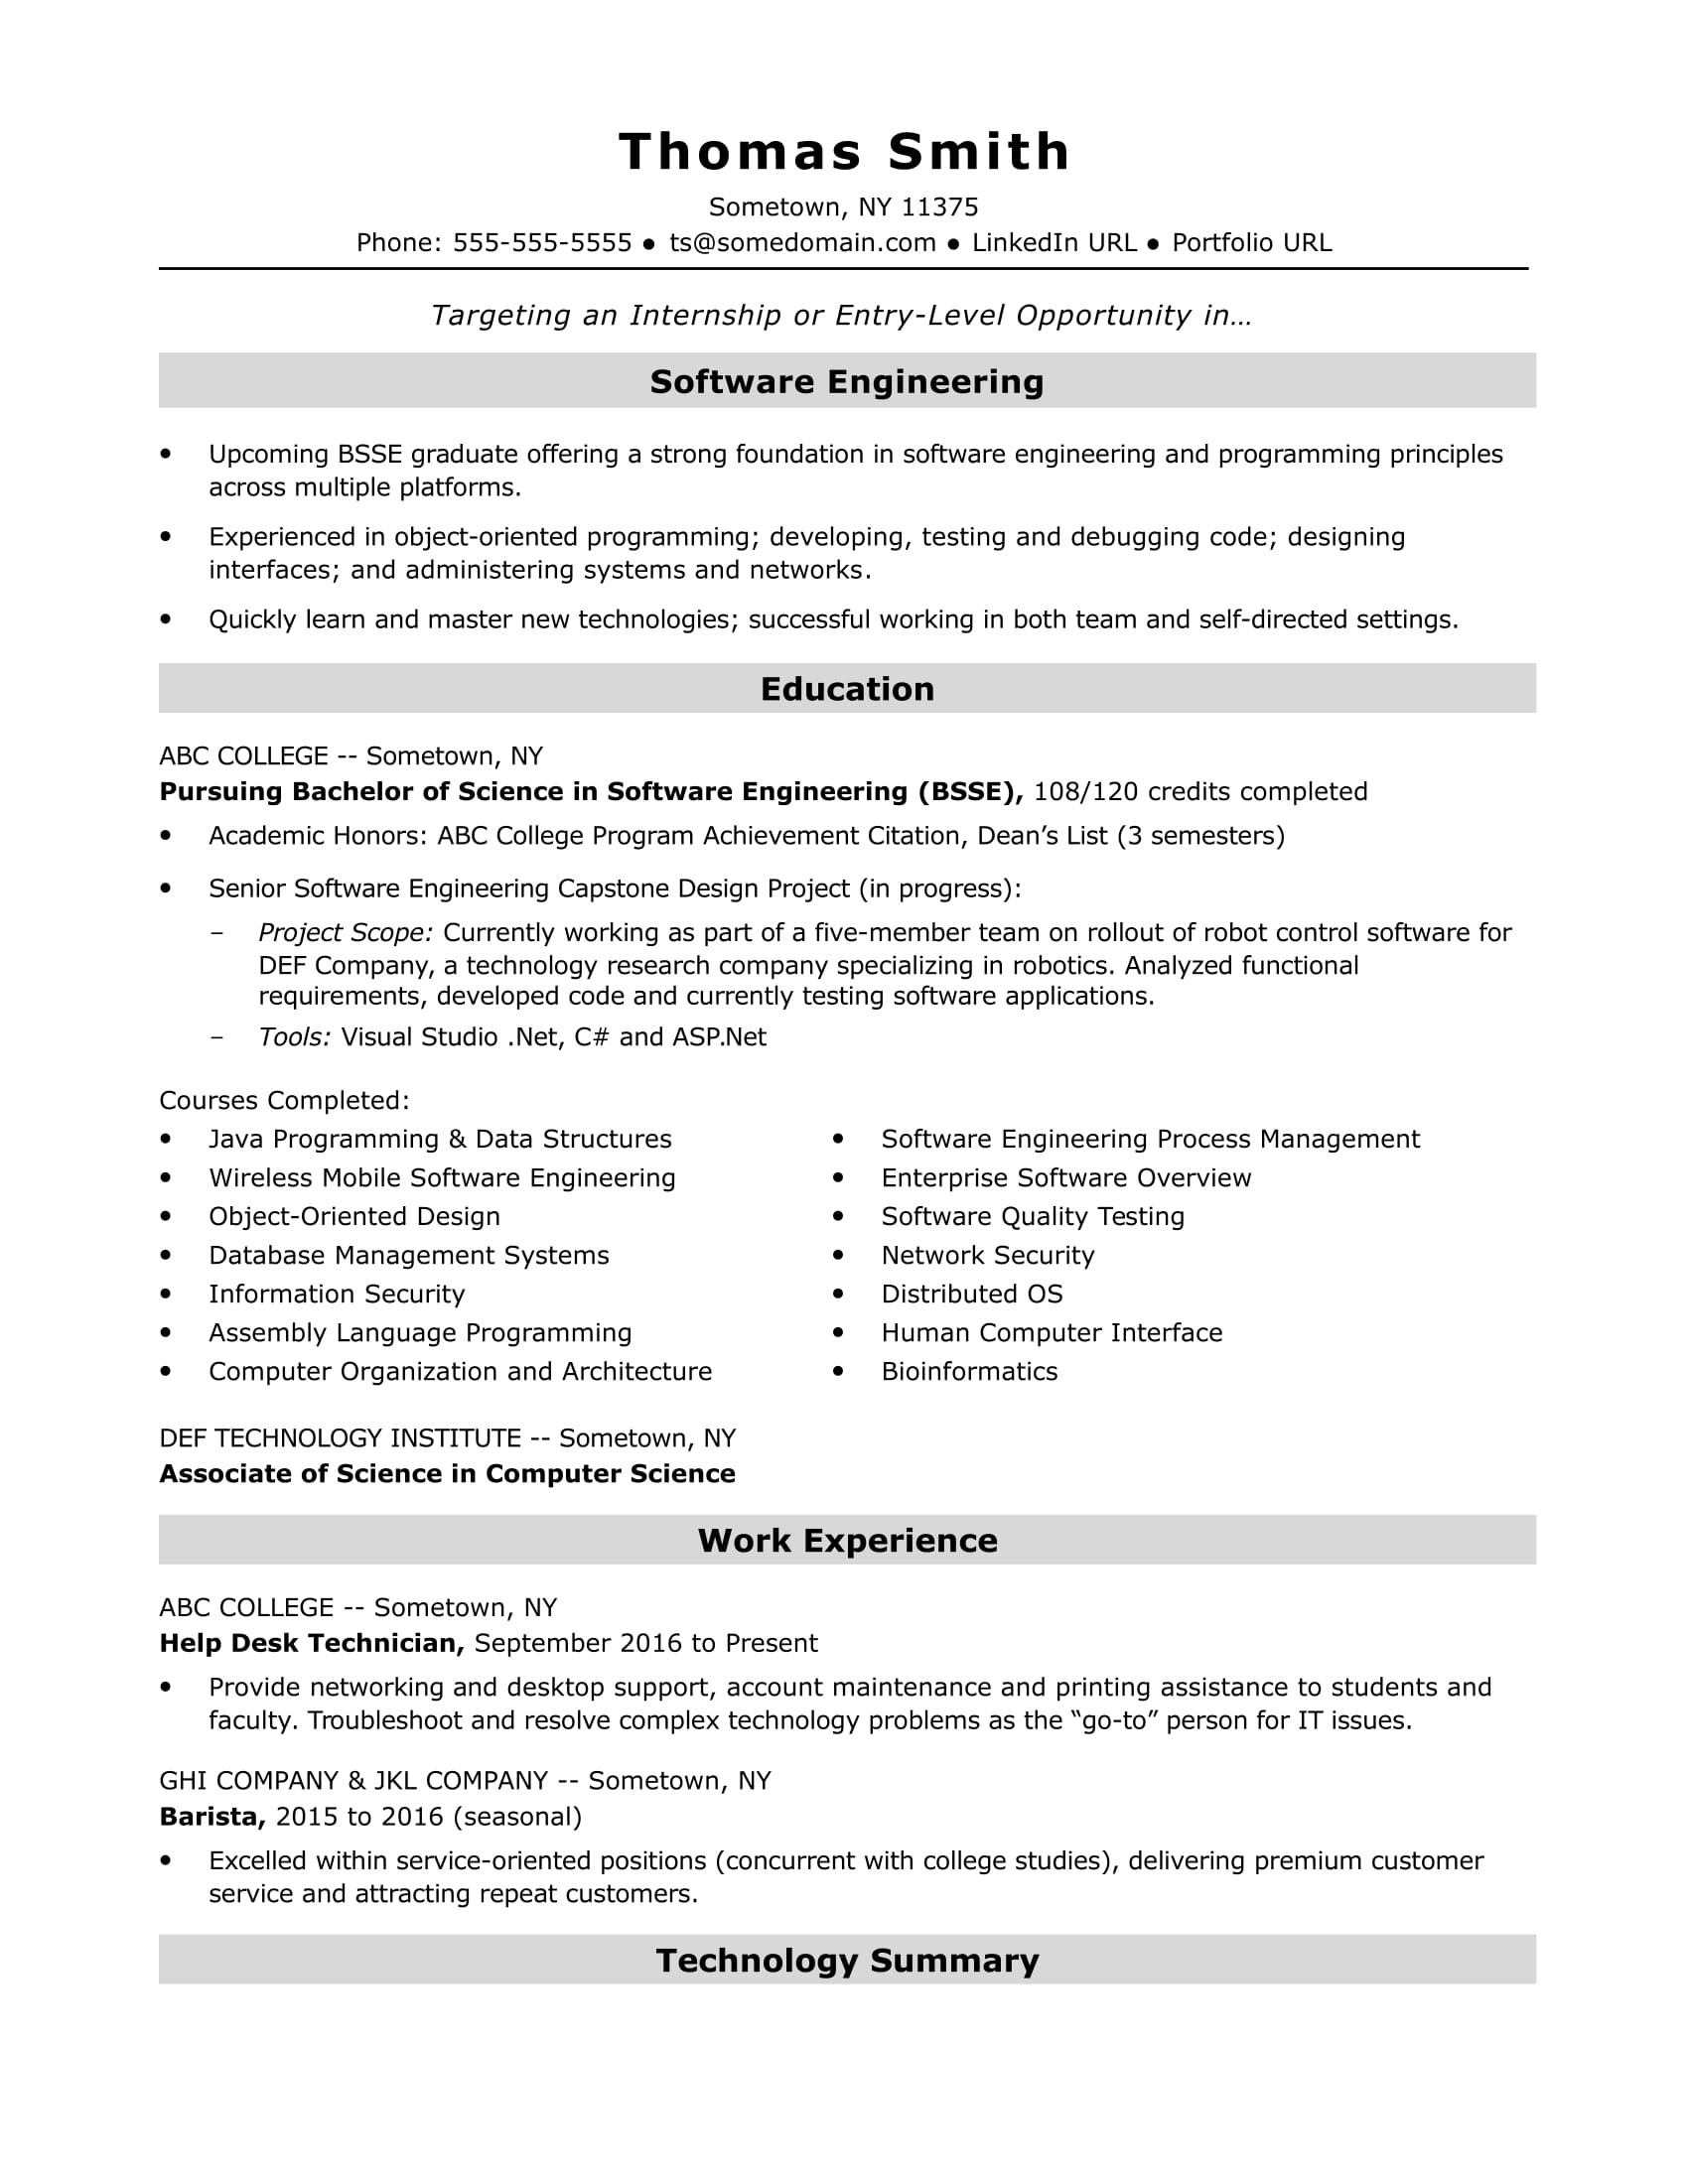 Recent Graduate Resume Computer Science Sample Entry-level software Engineer Resume Sample Monster.com